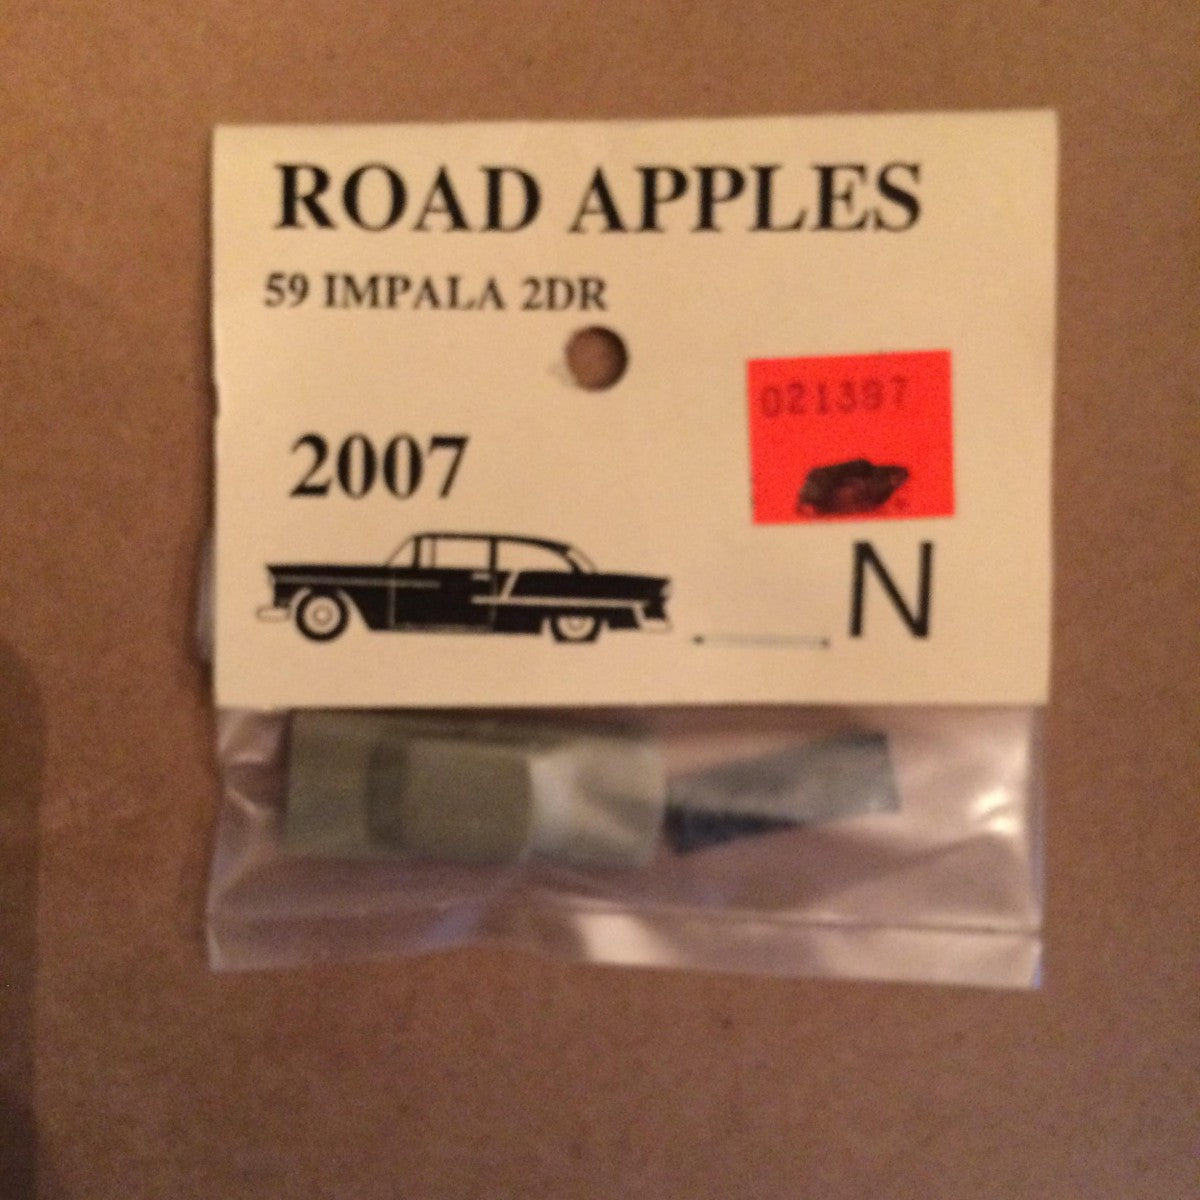 Road Apples 2007 '59 Impala 2dr Resin Kit